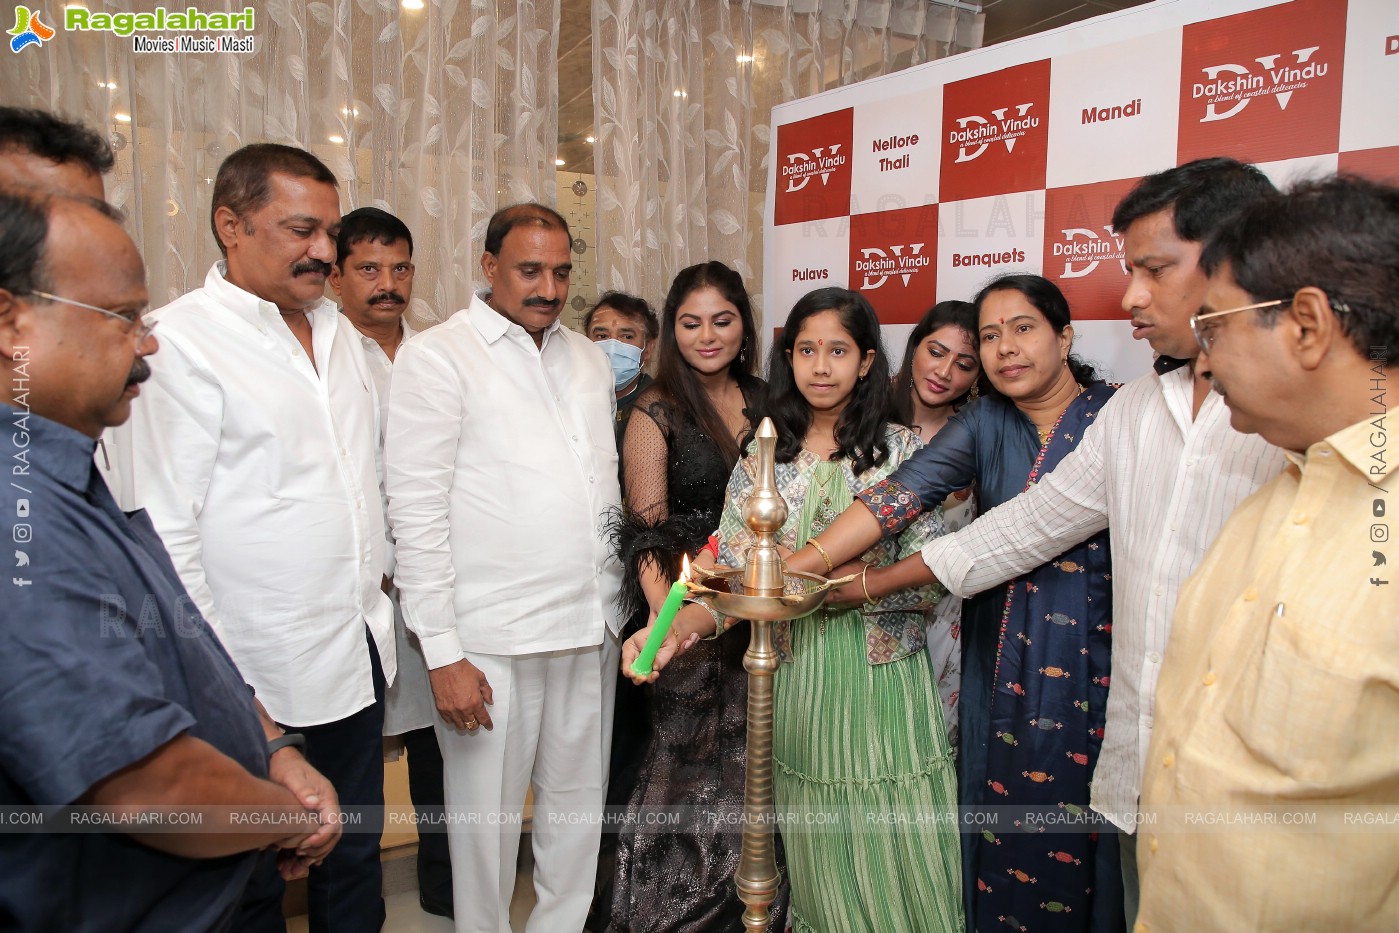 Dakshin Vindu Grand Launch at KPHB, Hyderabad